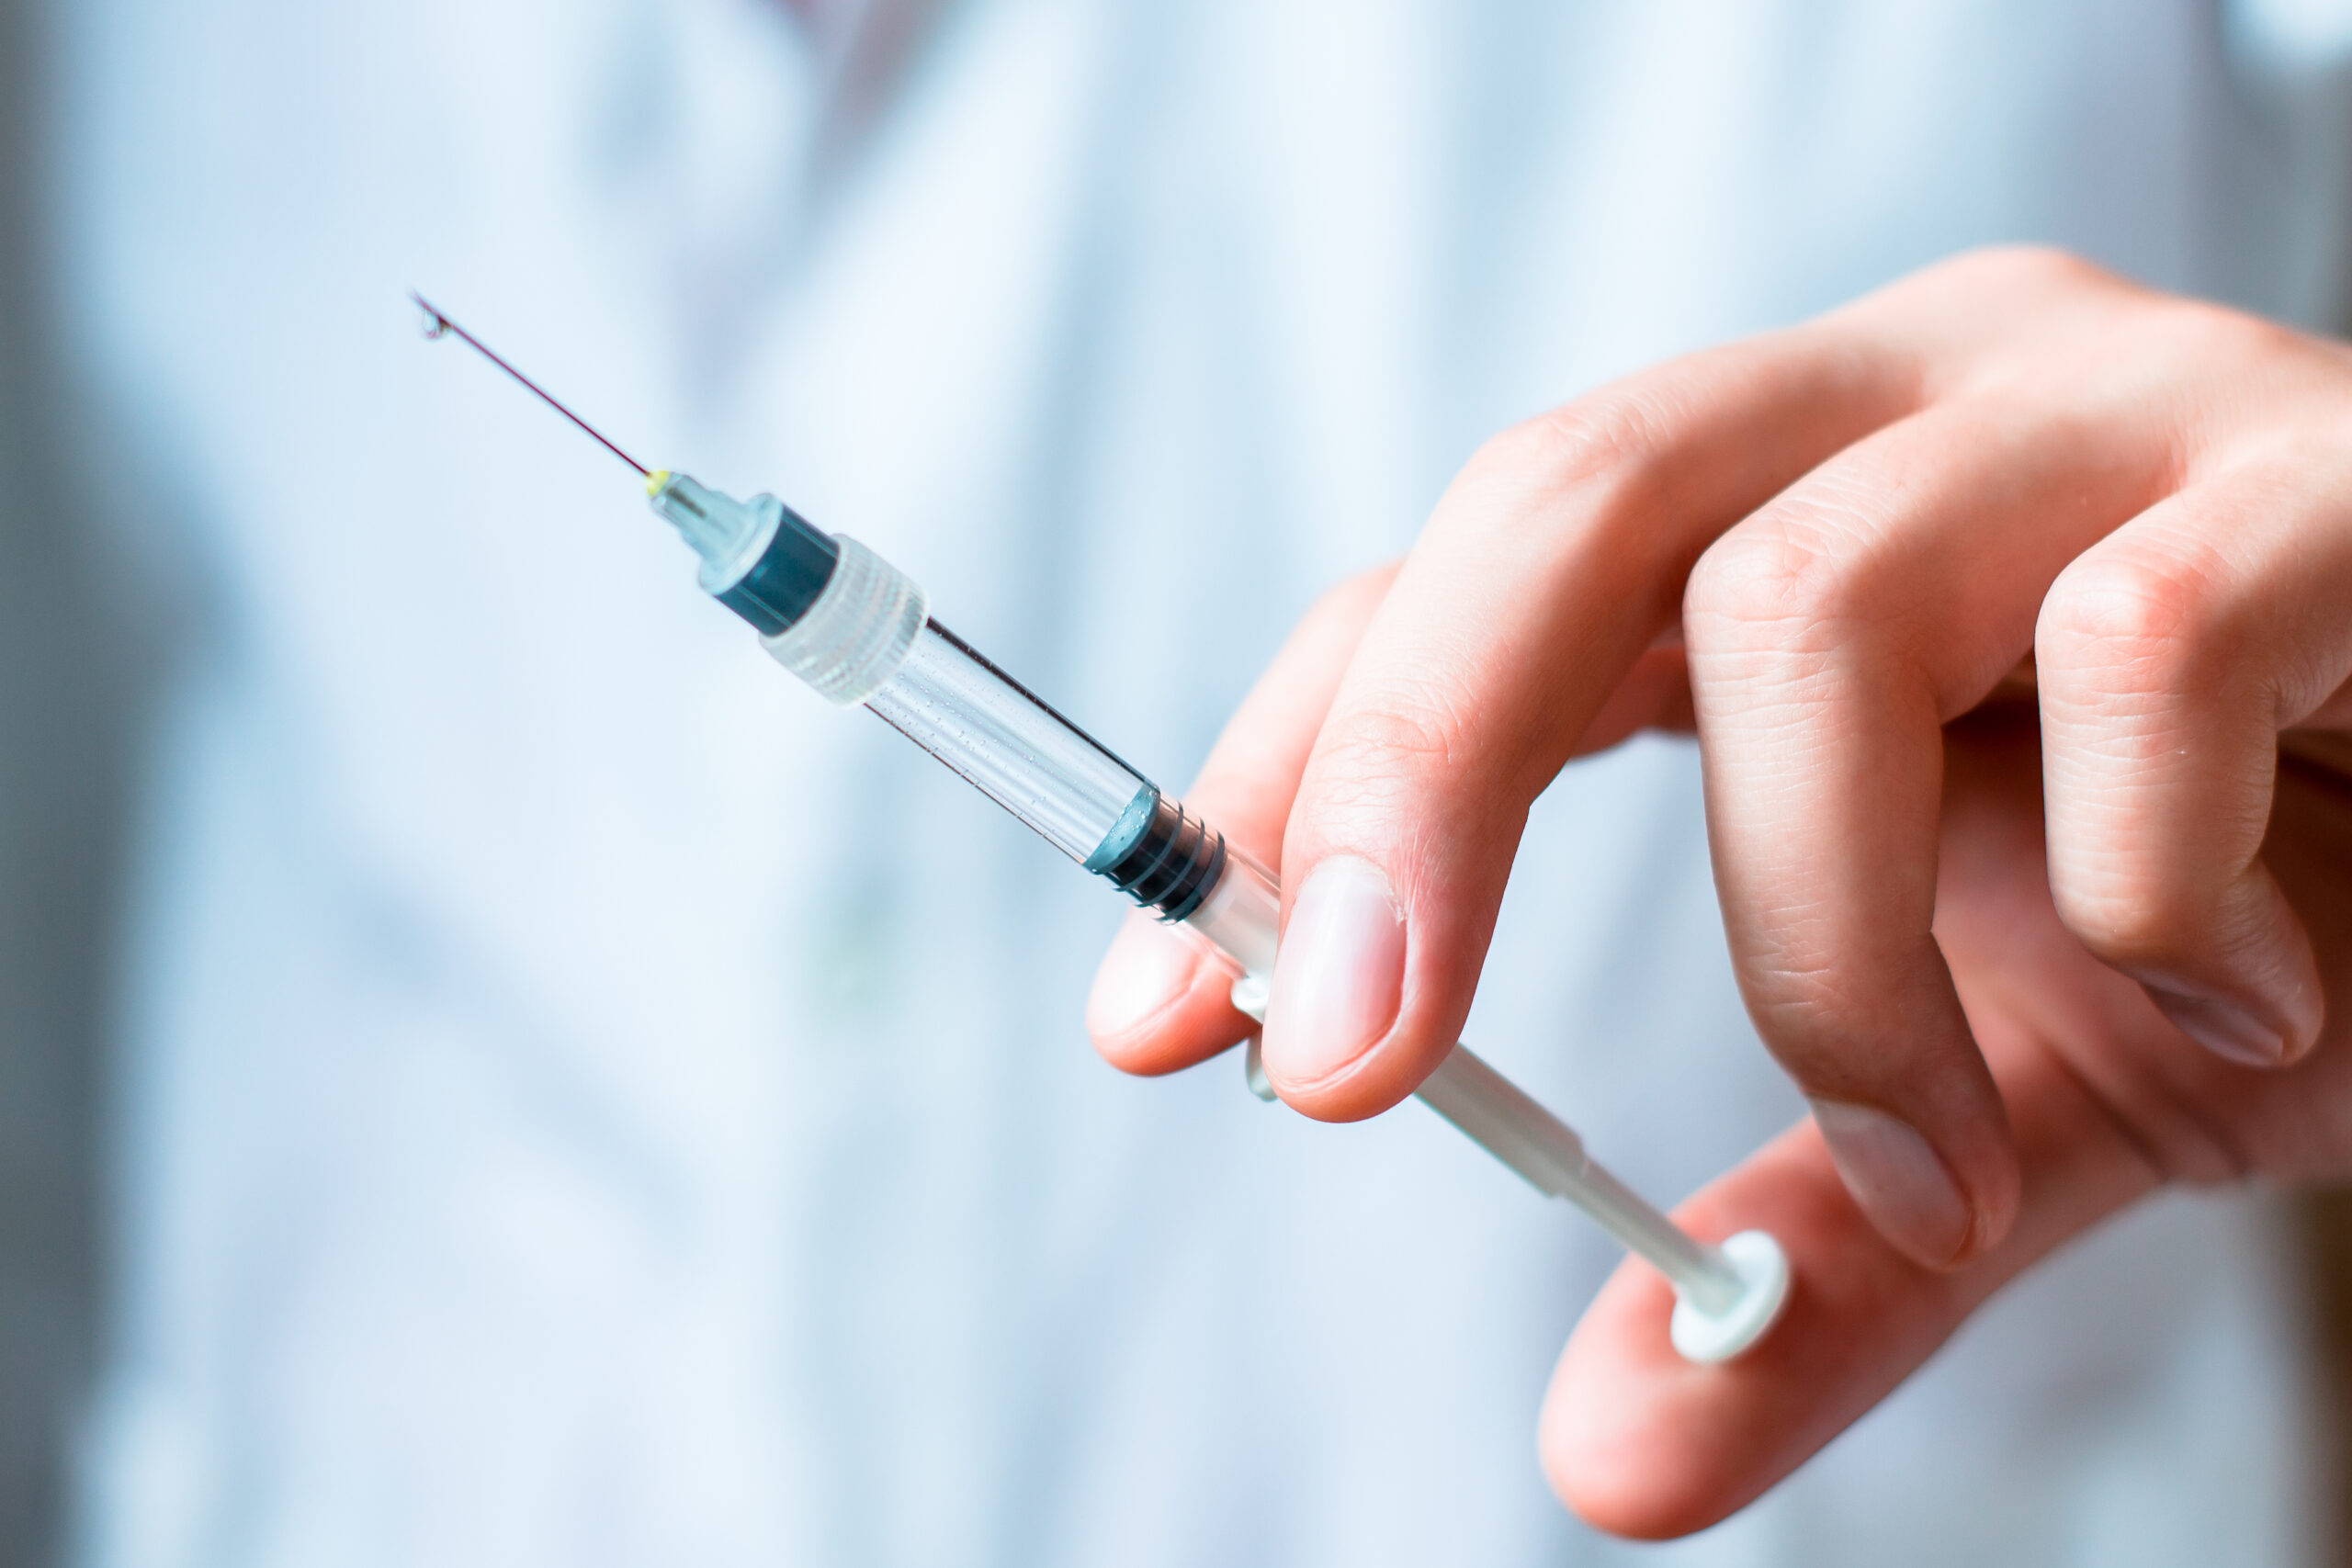 Syringe, medical injection